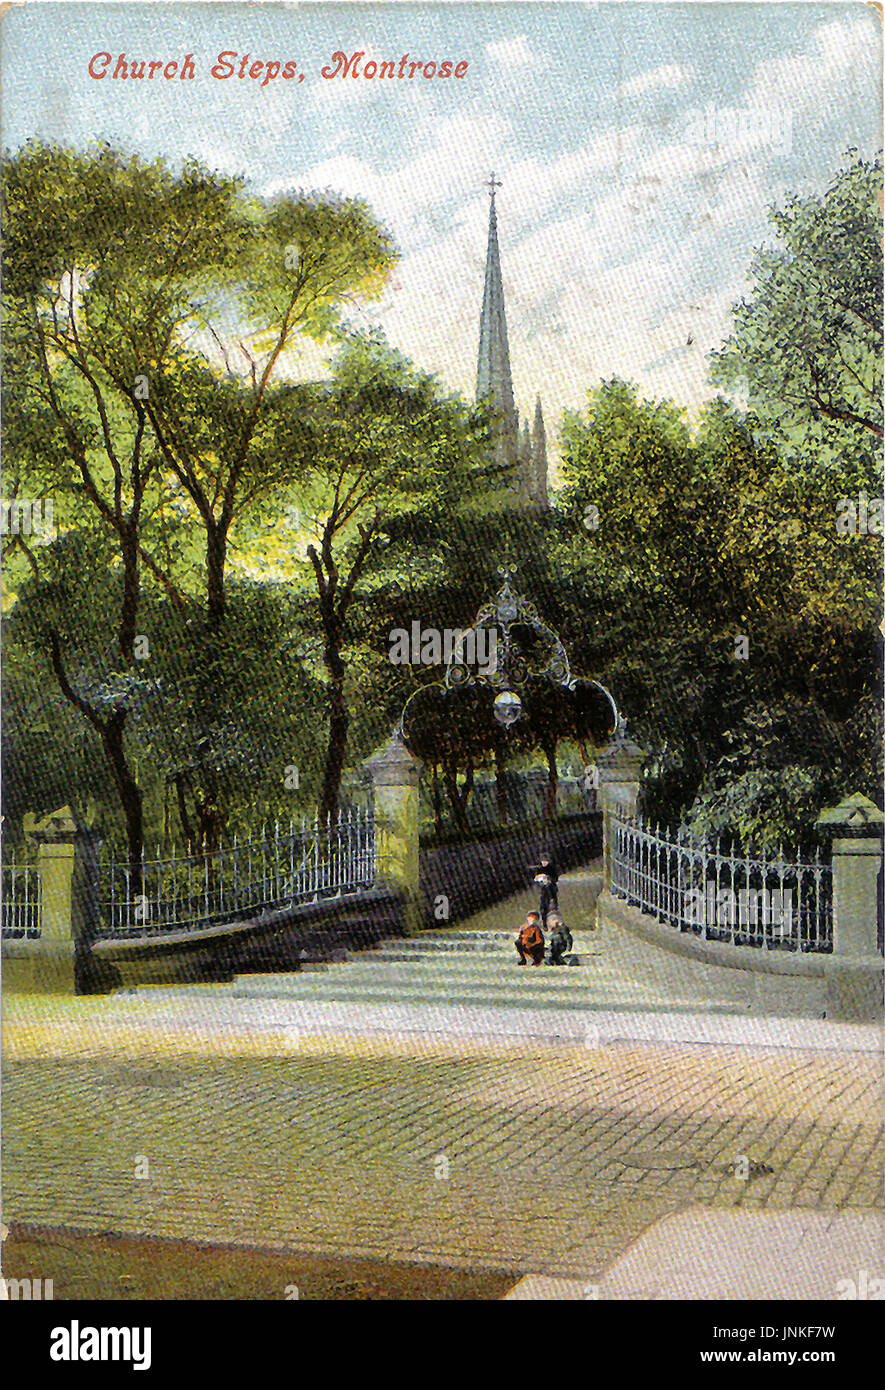 Vintage cartolina colore - Chiesa passi, Montrose, Angus, Scozia circa 1910 Foto Stock